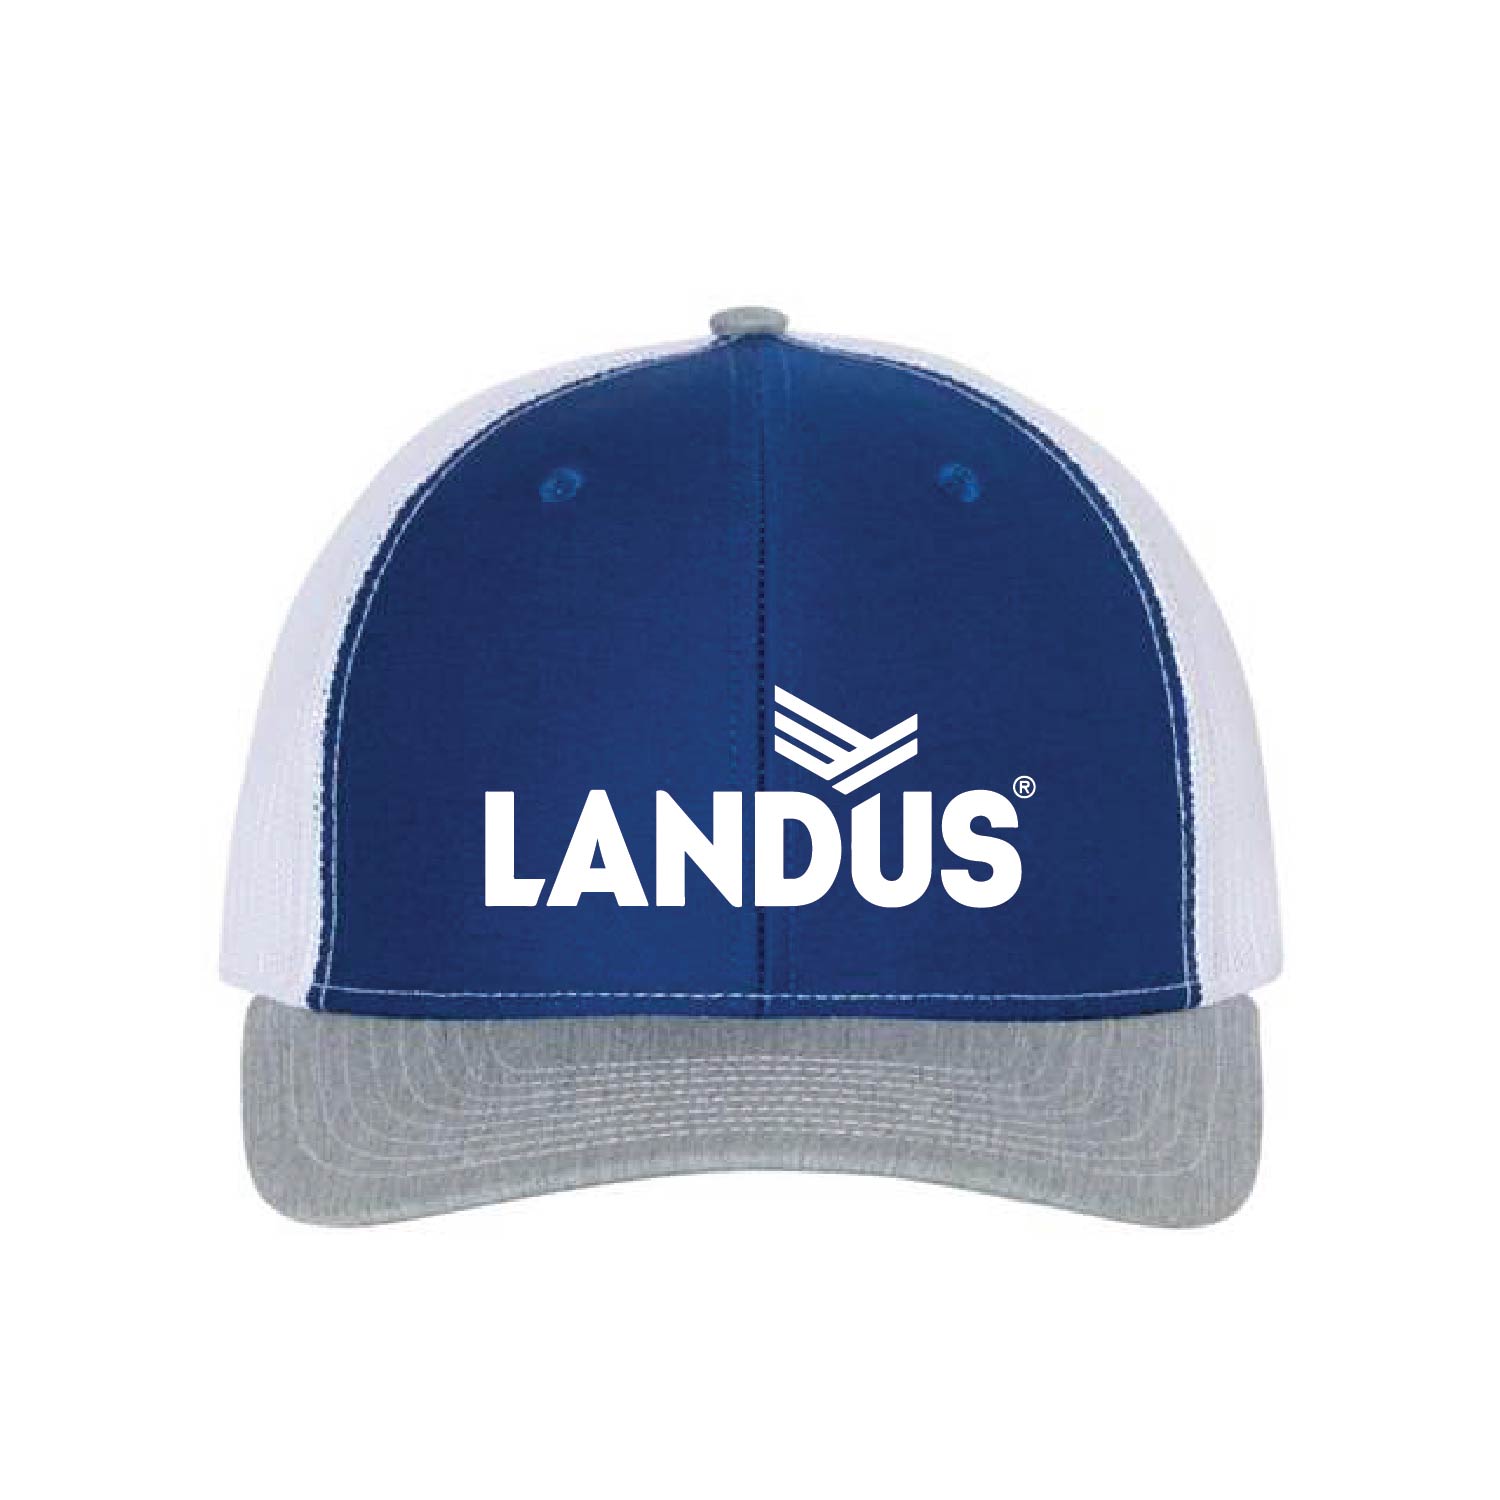 Landus/NK Hats